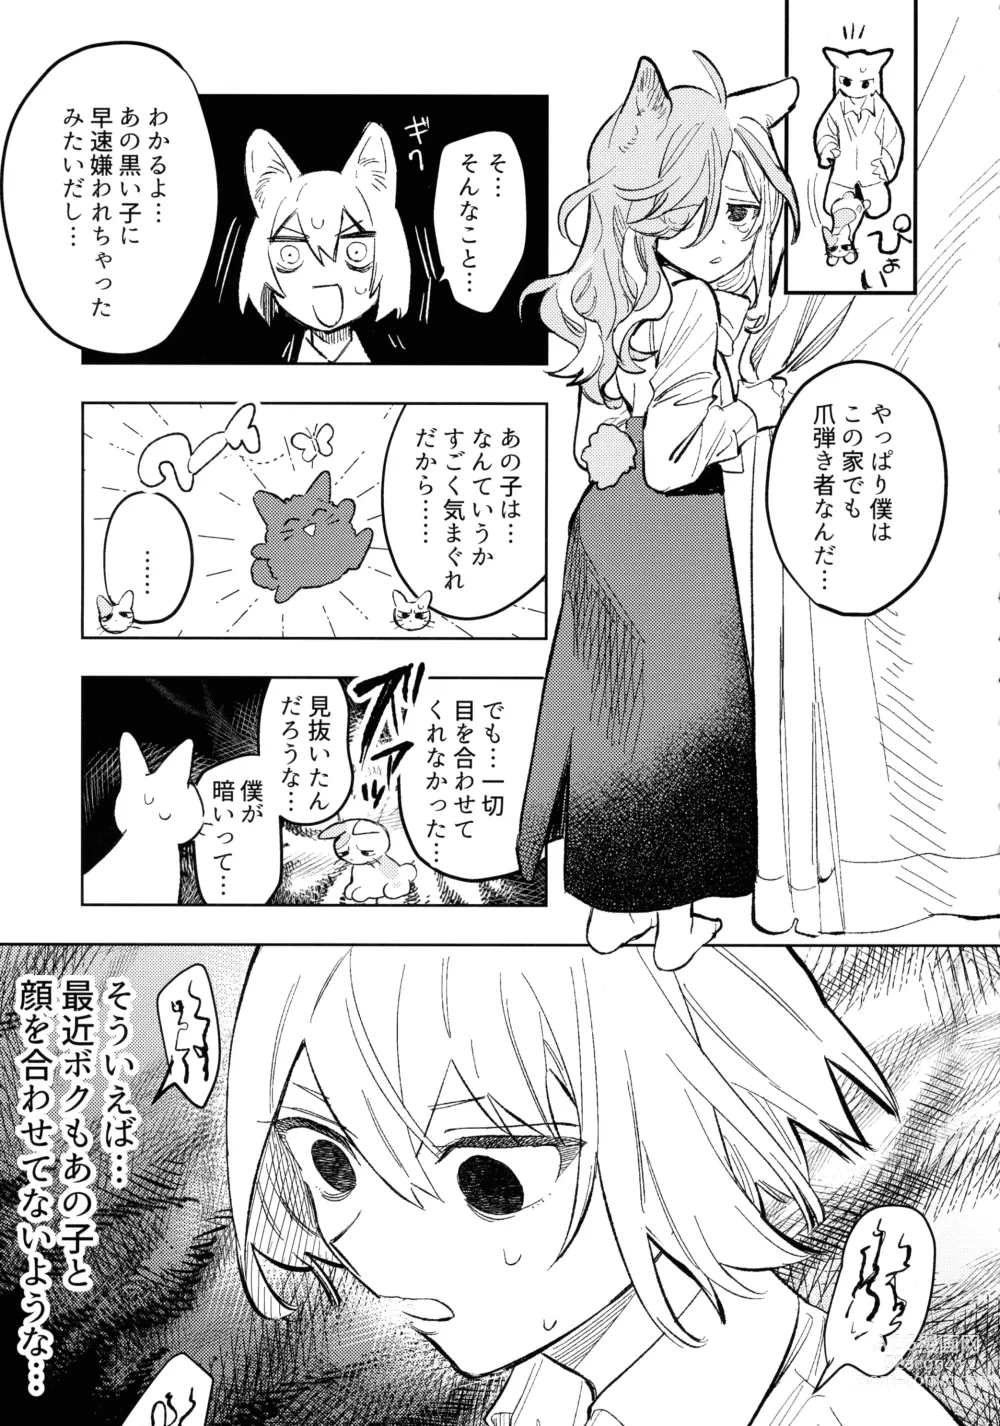 Page 7 of doujinshi Neko-chan Life Sumeragi